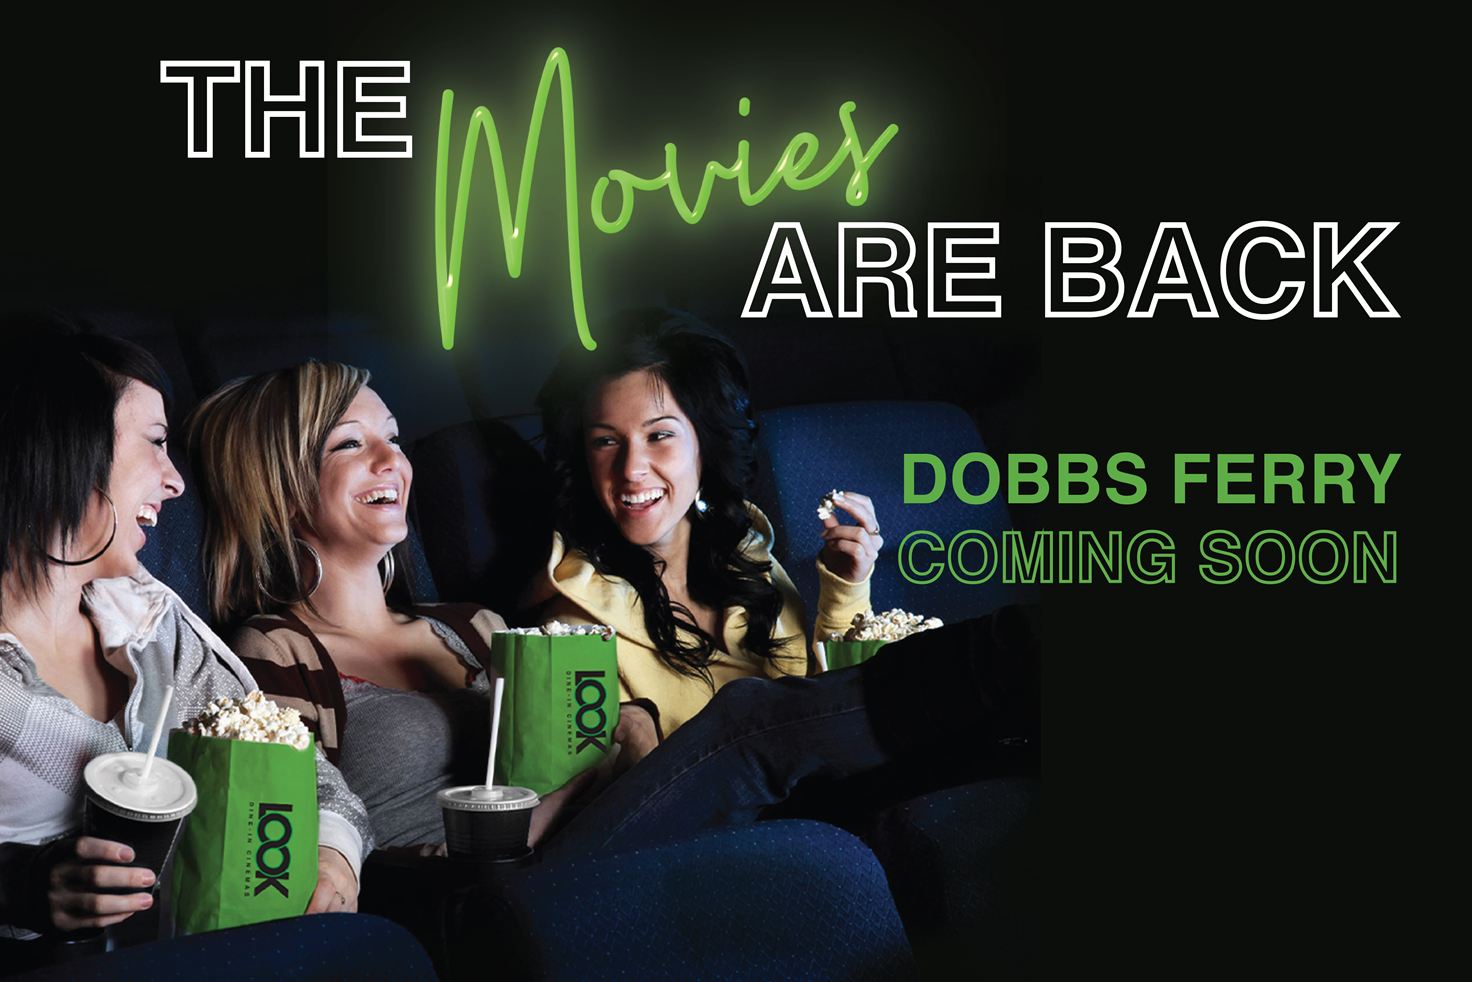 Dobbs Ferry, NY - LOOK Dine-in Cinema